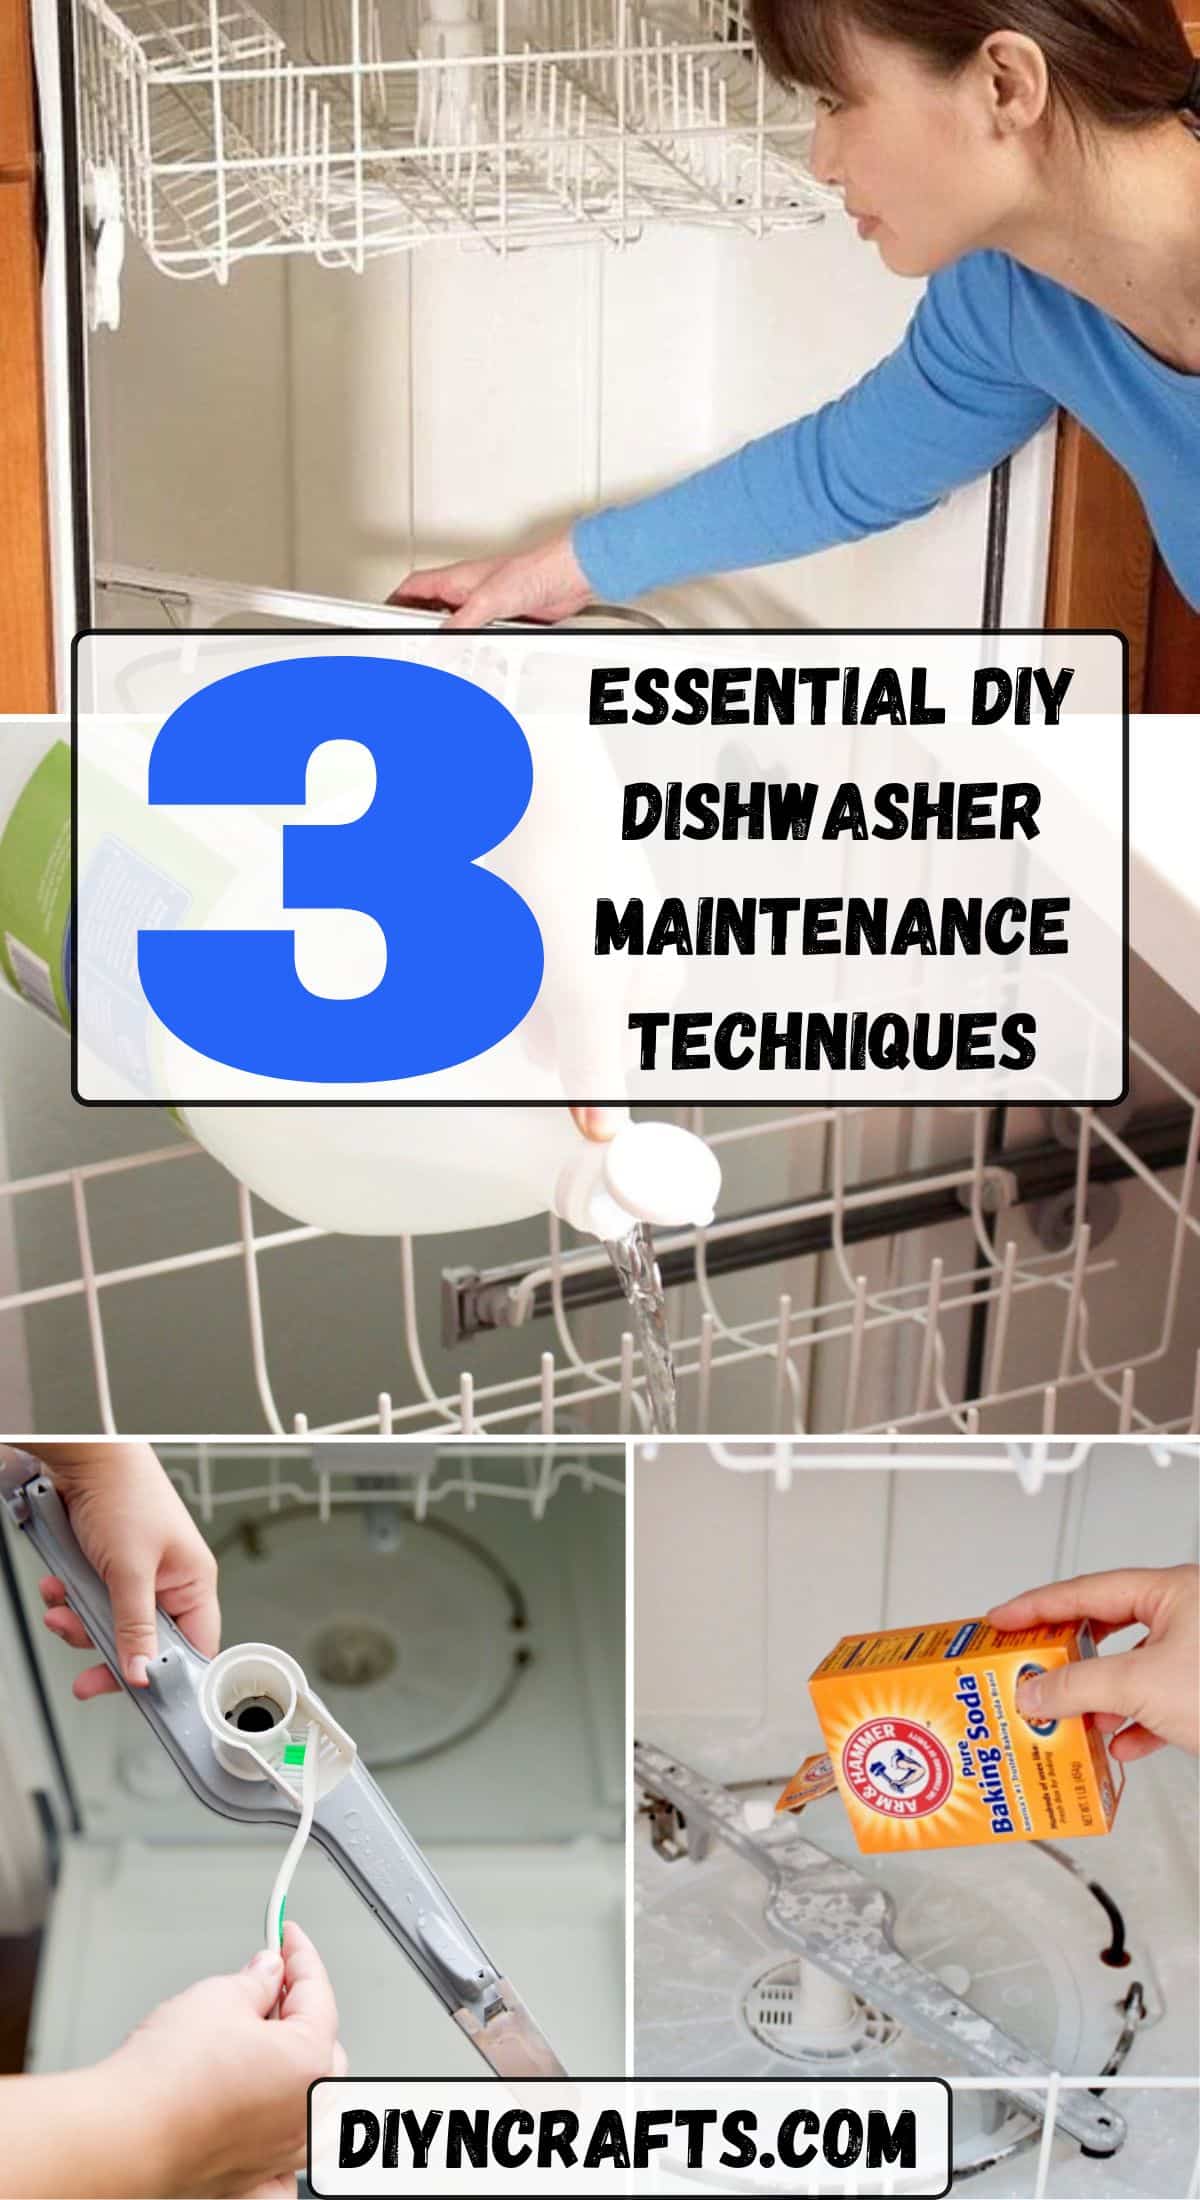 Top 3 Essential DIY Dishwasher Maintenance Techniques collage.